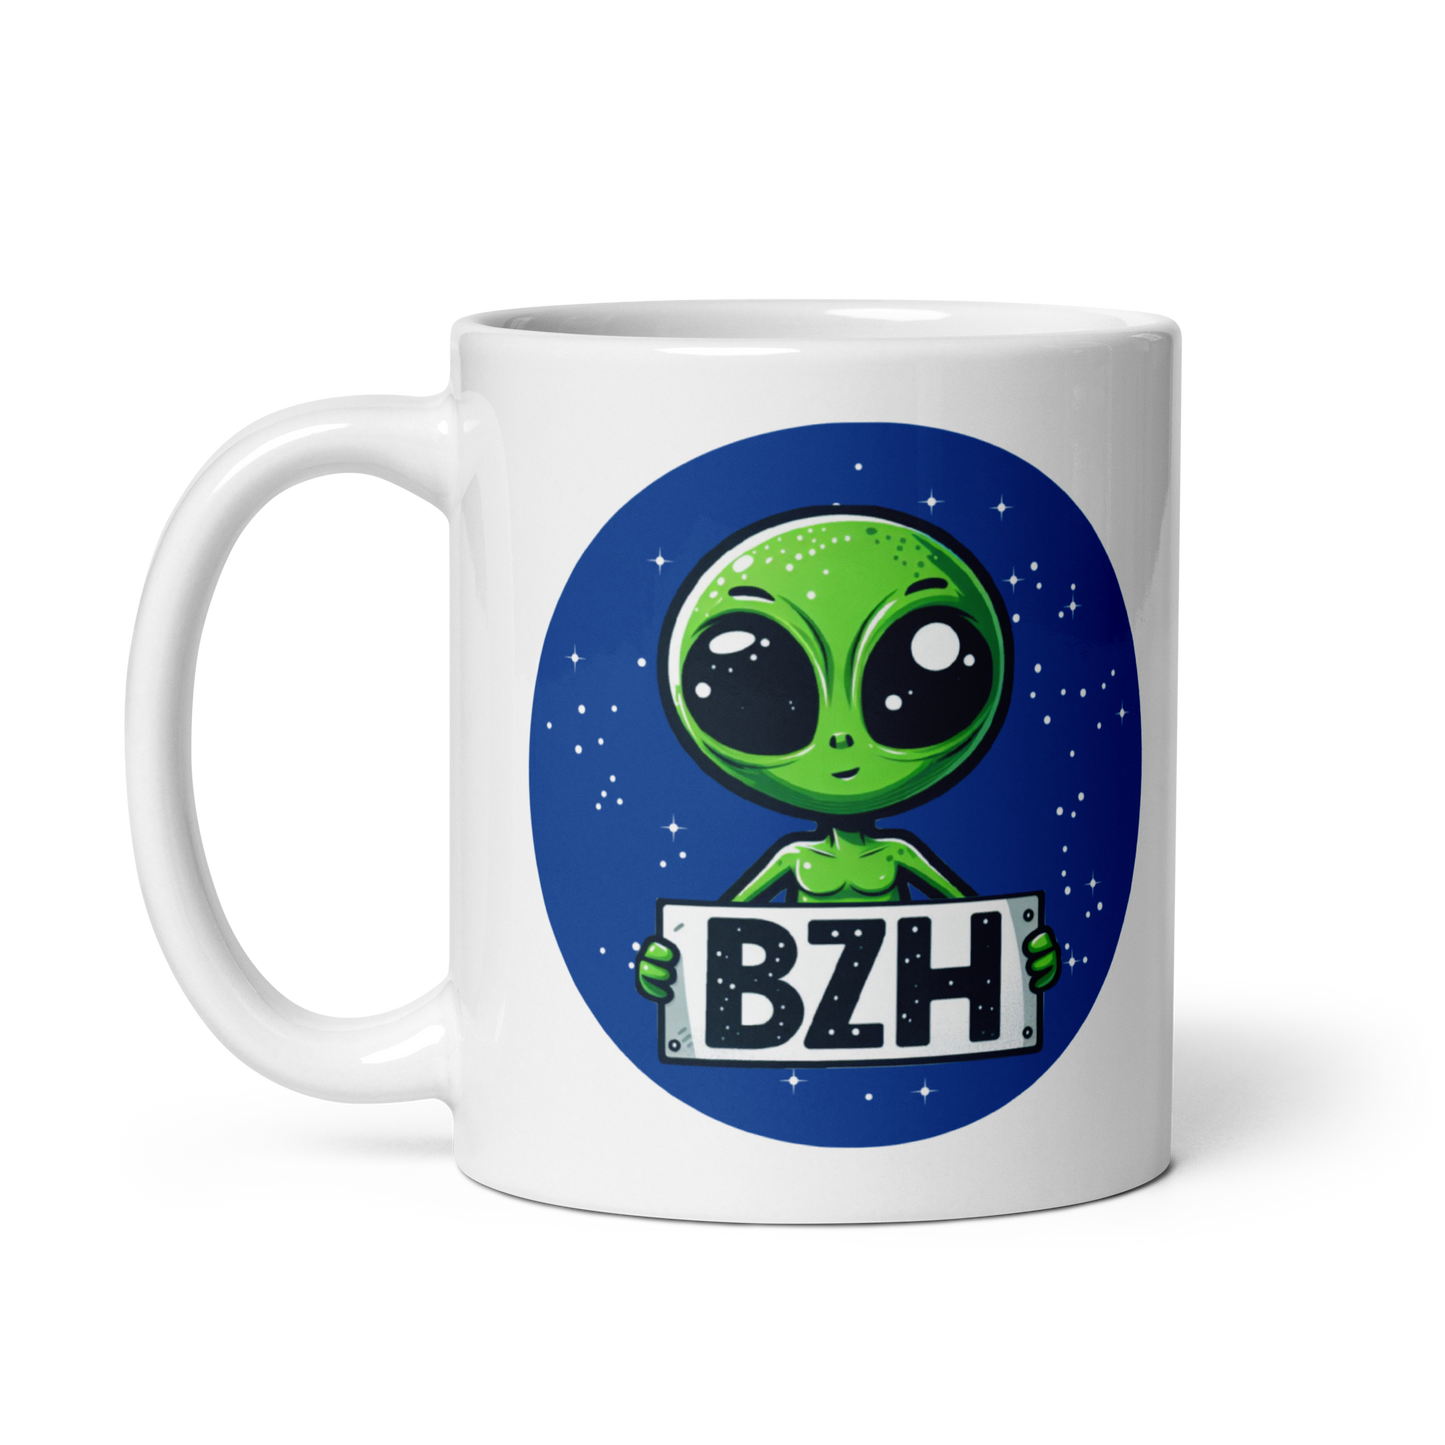 Alien BZH Mug: Adopt the Breton extra-terrestrial!